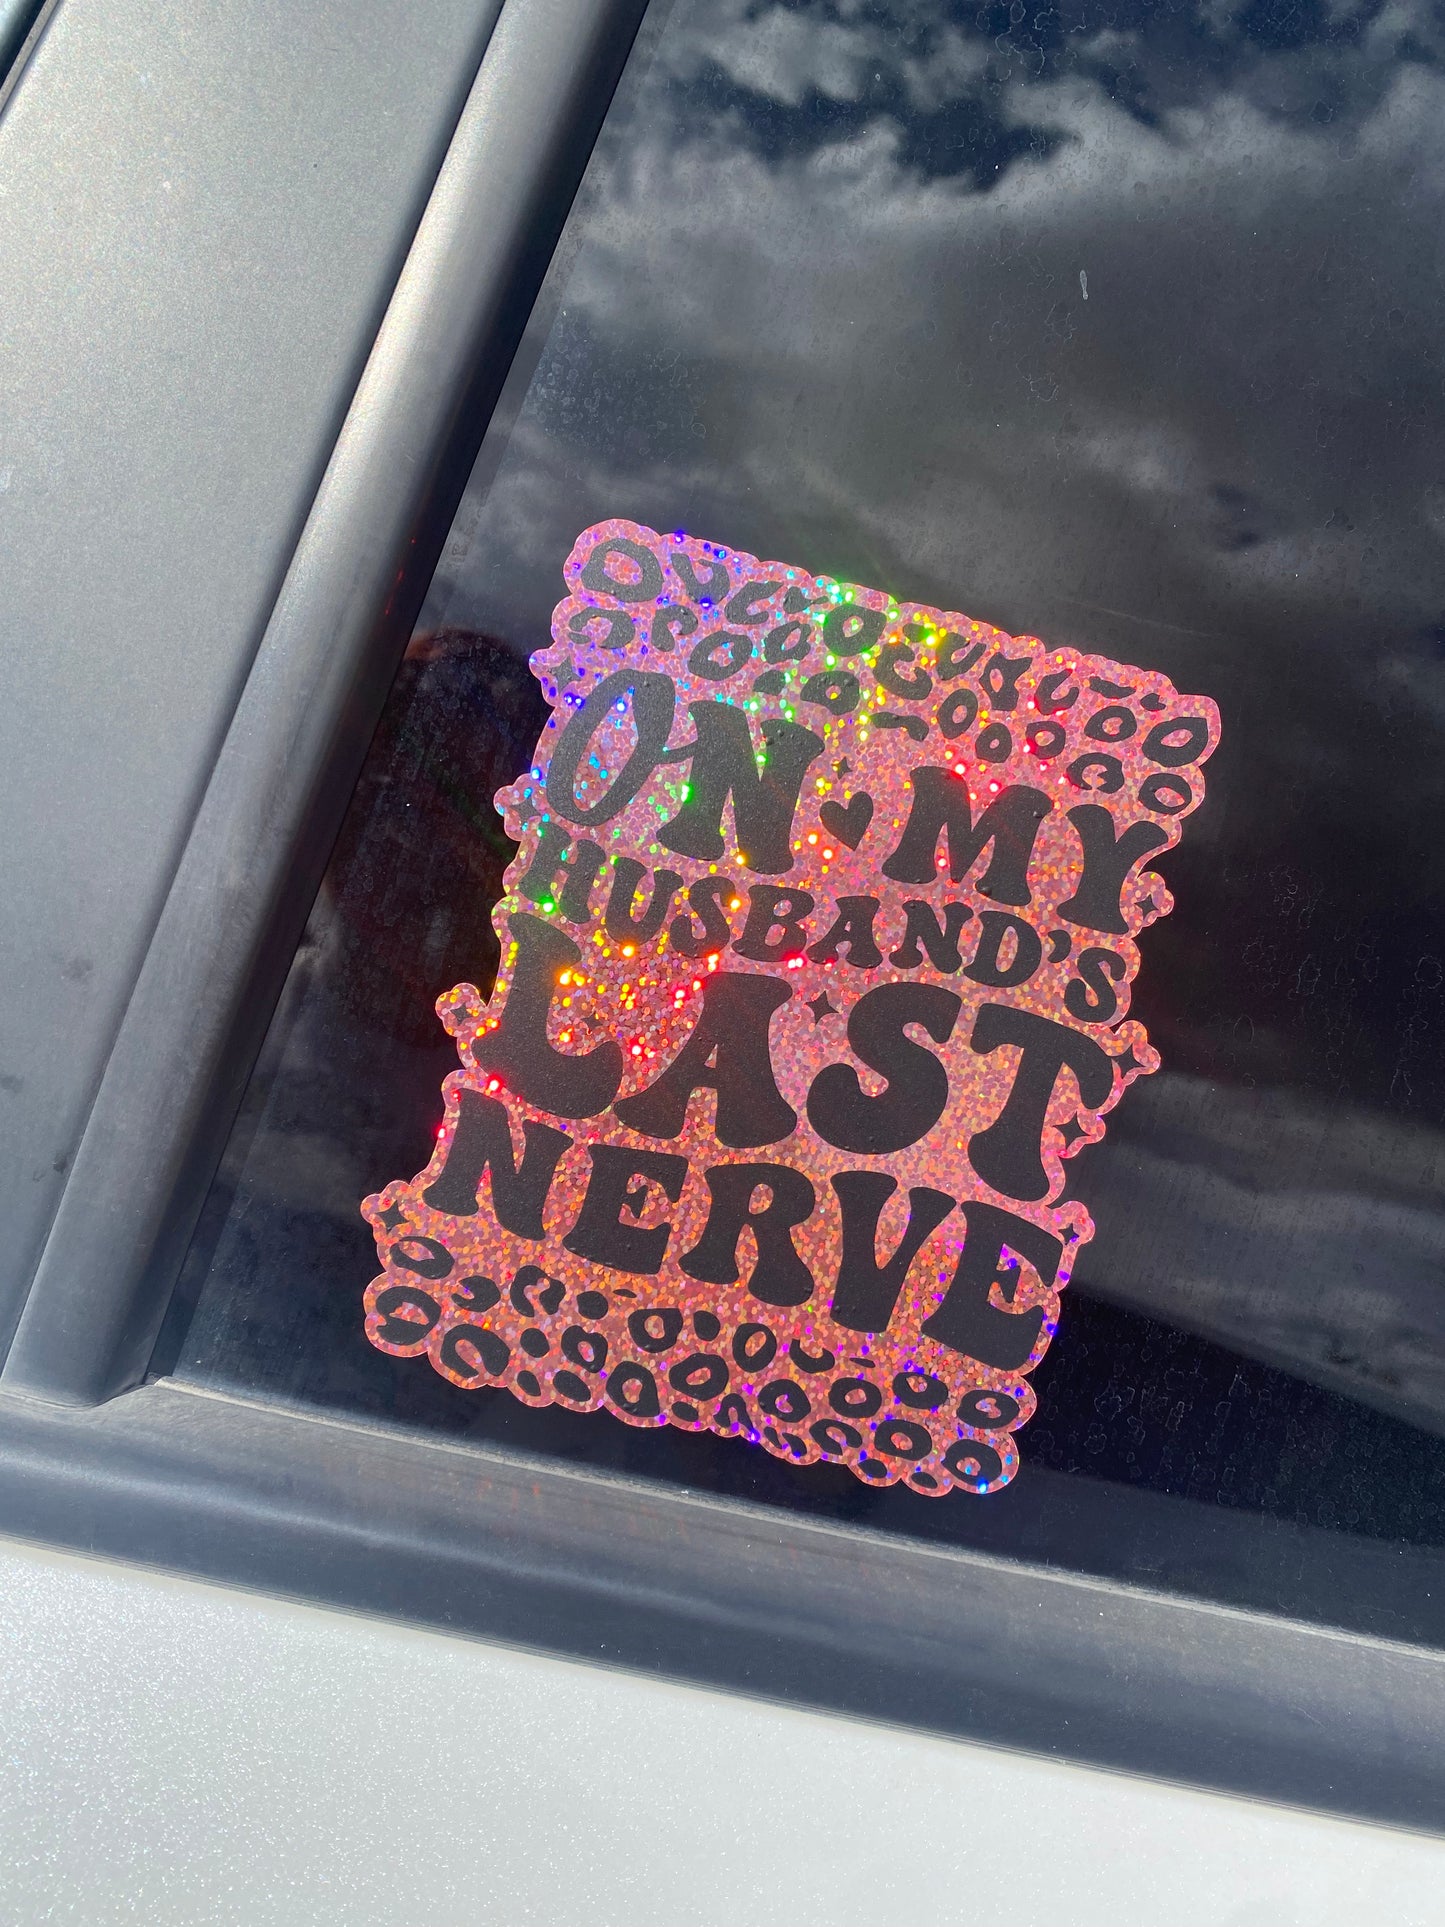 On My Husbands Last Nerve Car Decal